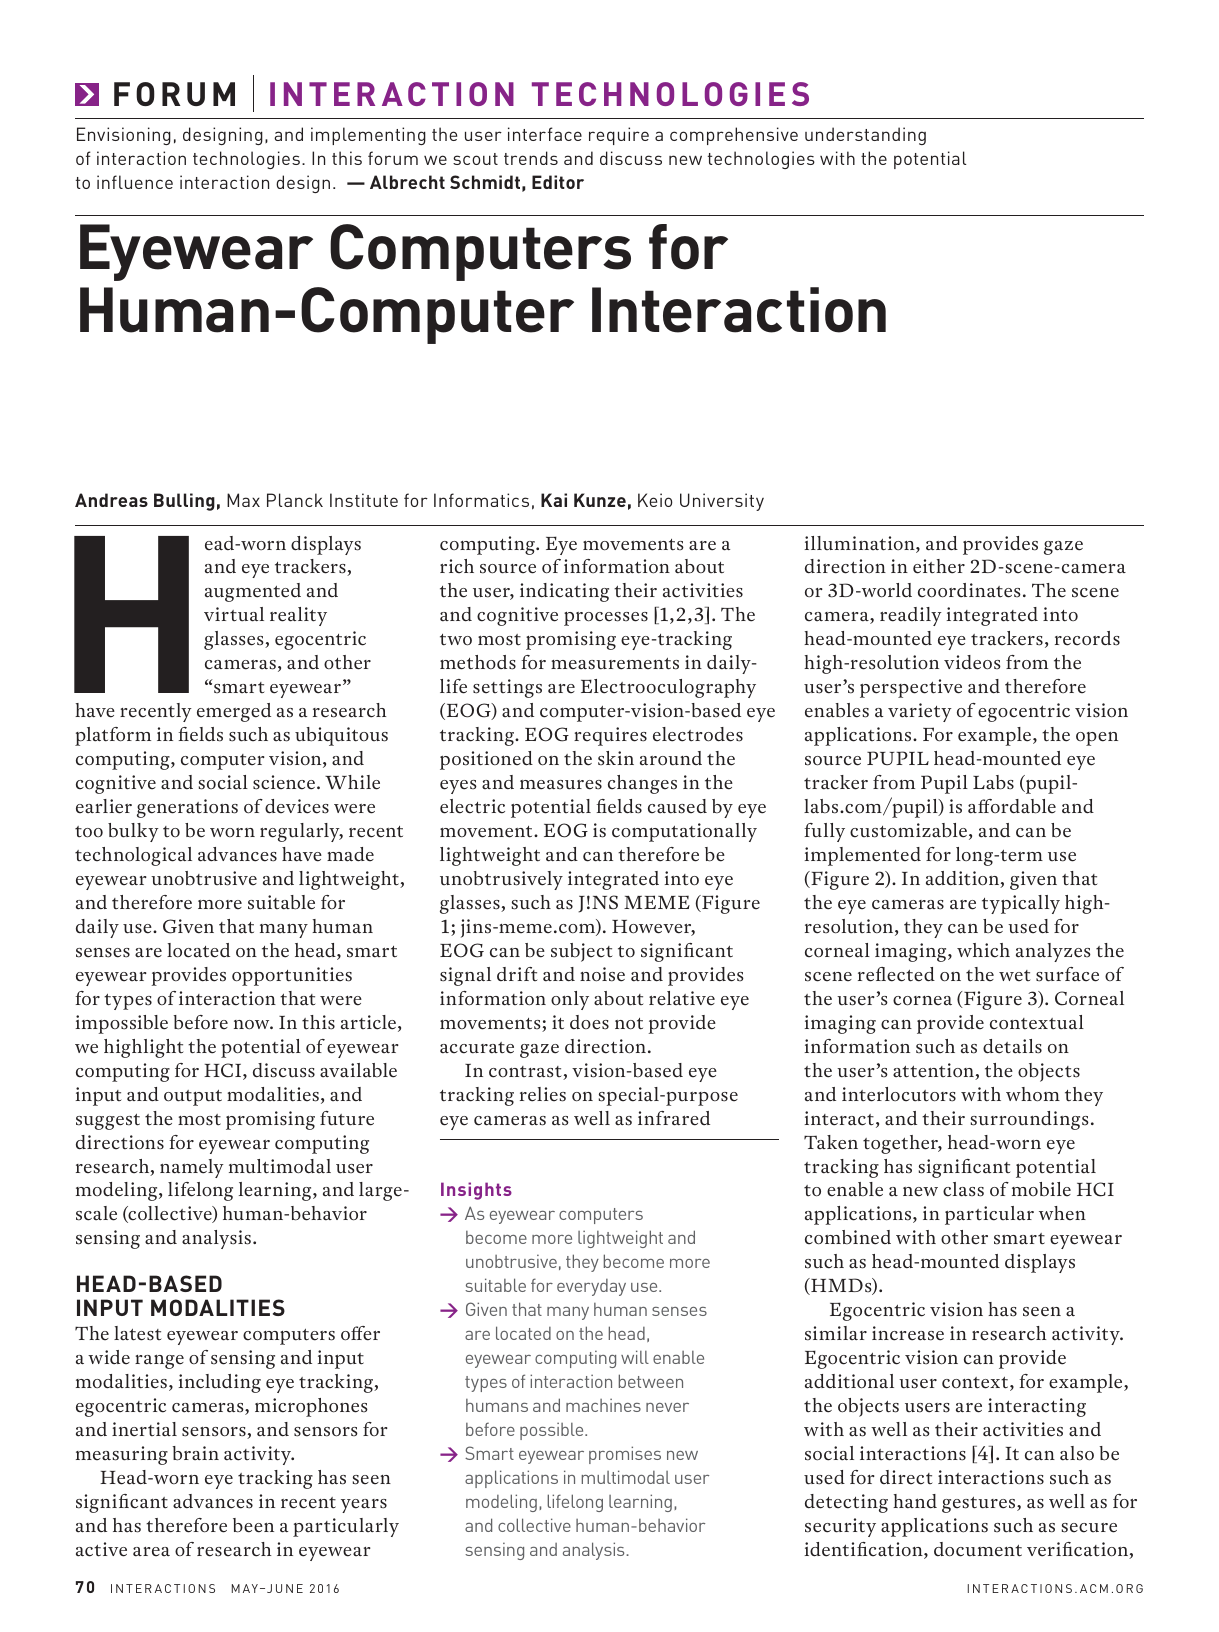 EyeWear Computers for Human-Computer Interaction